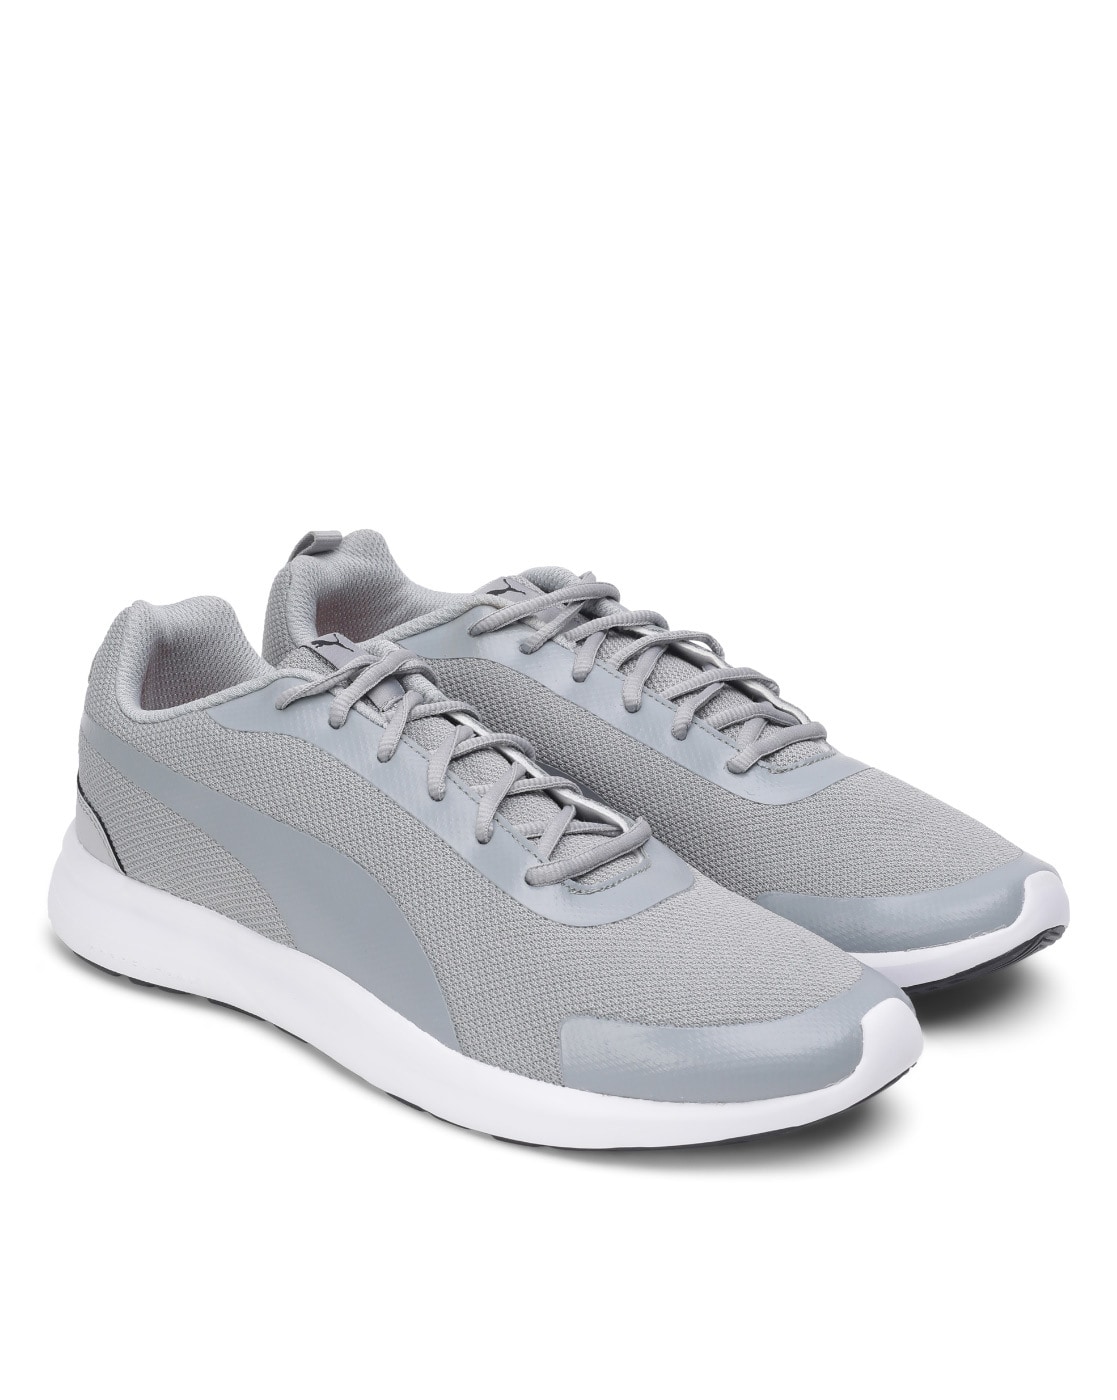 puma shoes grey